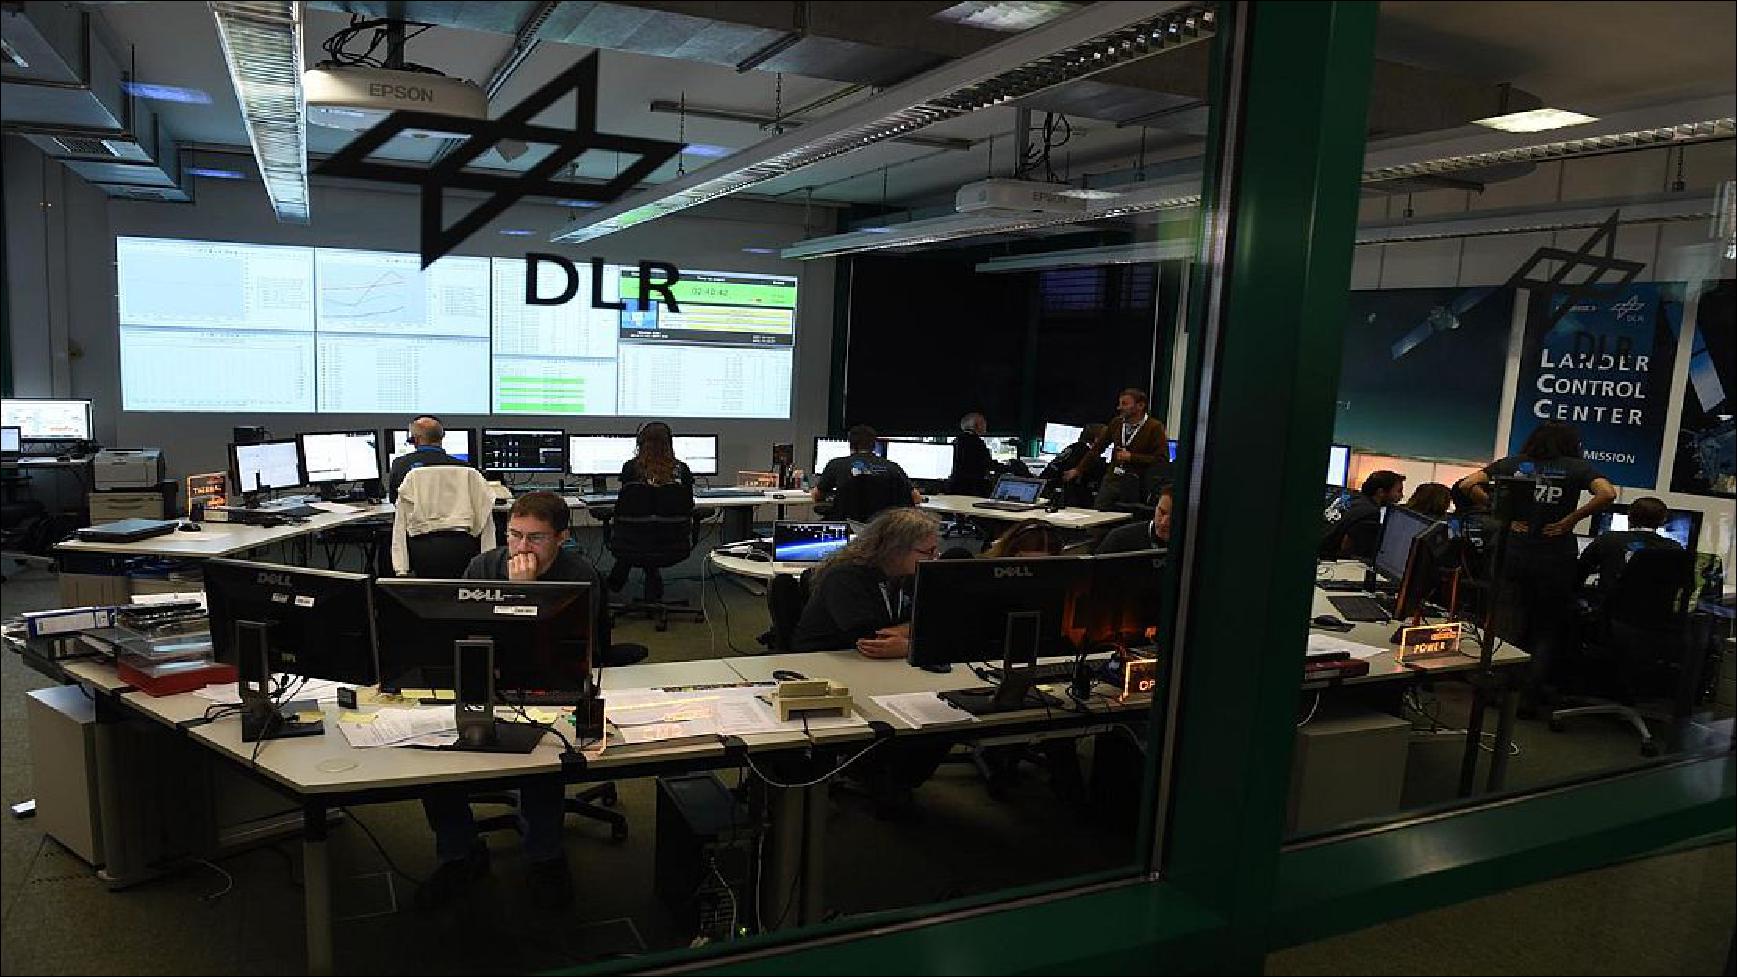 Figure 138: Photo of the LLC (Lander Control Center) at DLR (image credit: DLR)